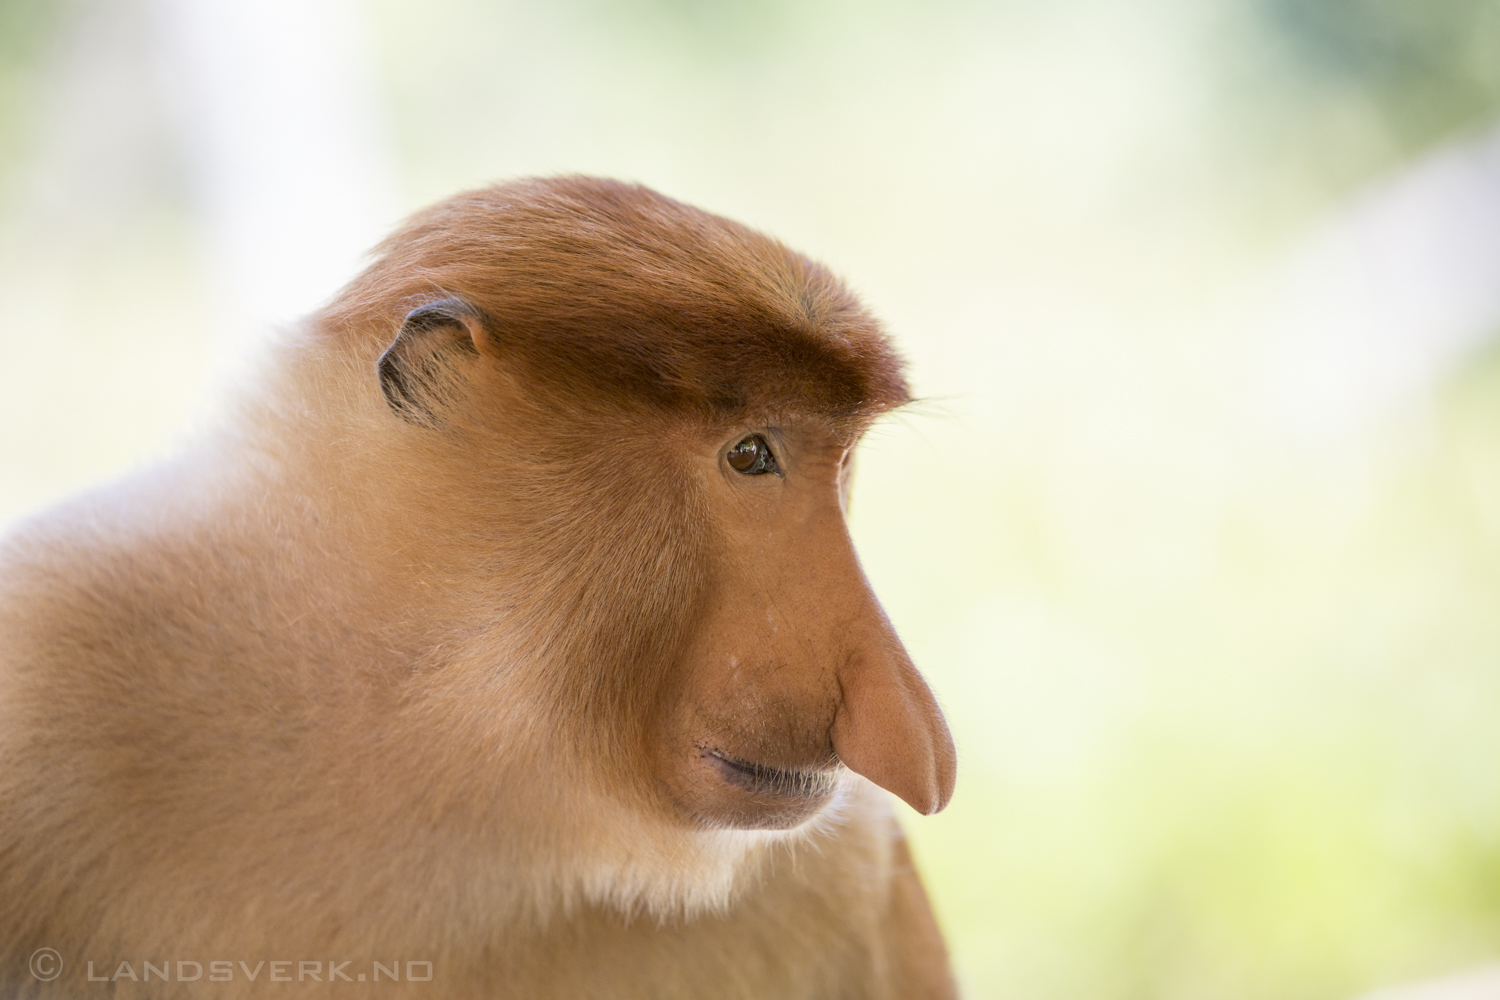 Wild Proboscis monkey. Kota Kinabatangan, Borneo.

(Canon EOS 5D Mark III / Canon EF 70-200mm f/2.8 L IS II USM)